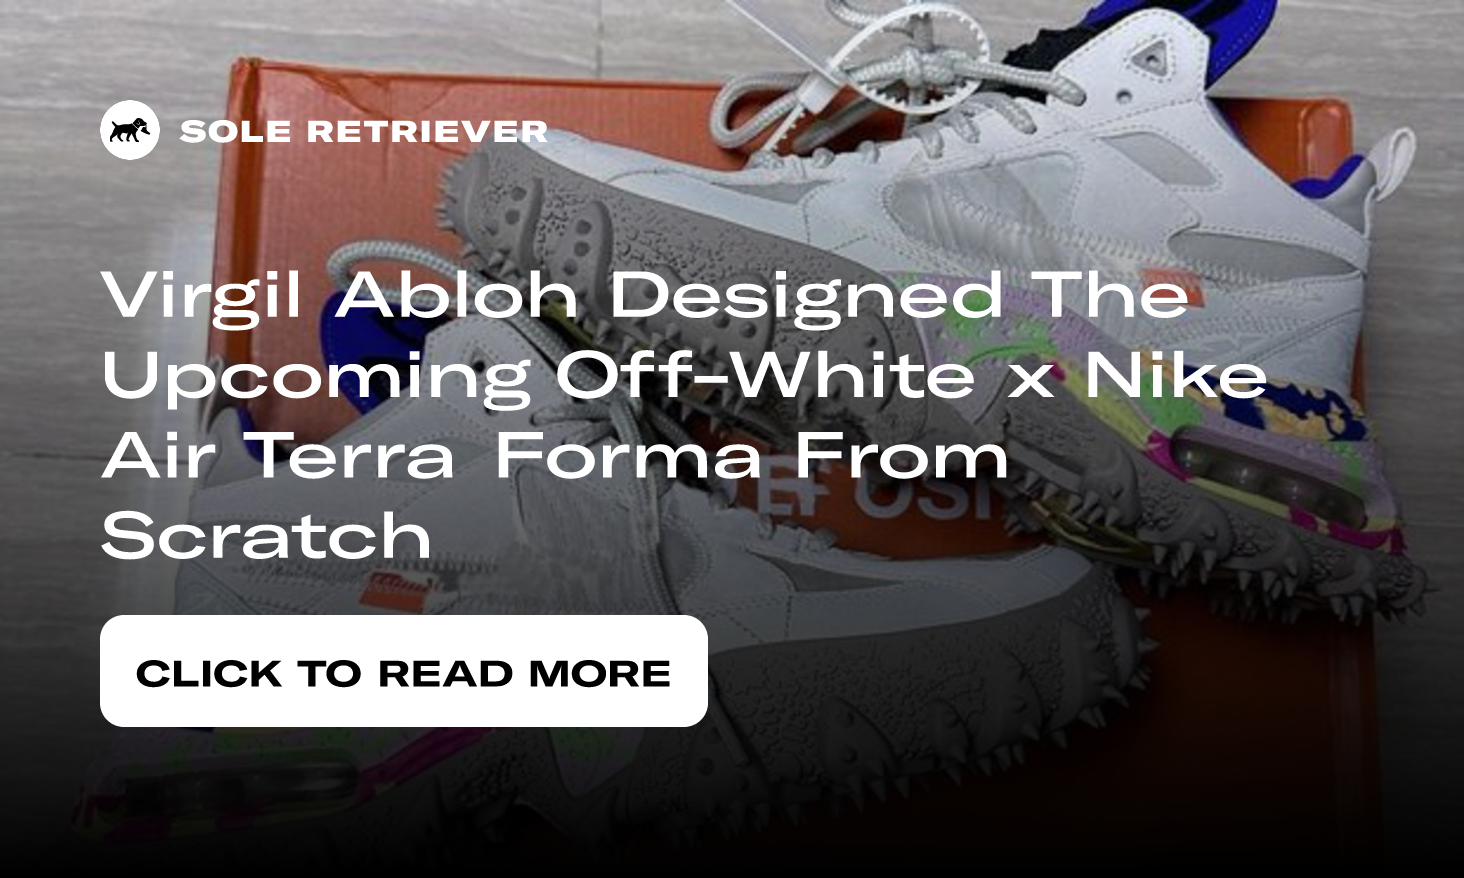 Off-White x Nike Air Terra Forma Release Date